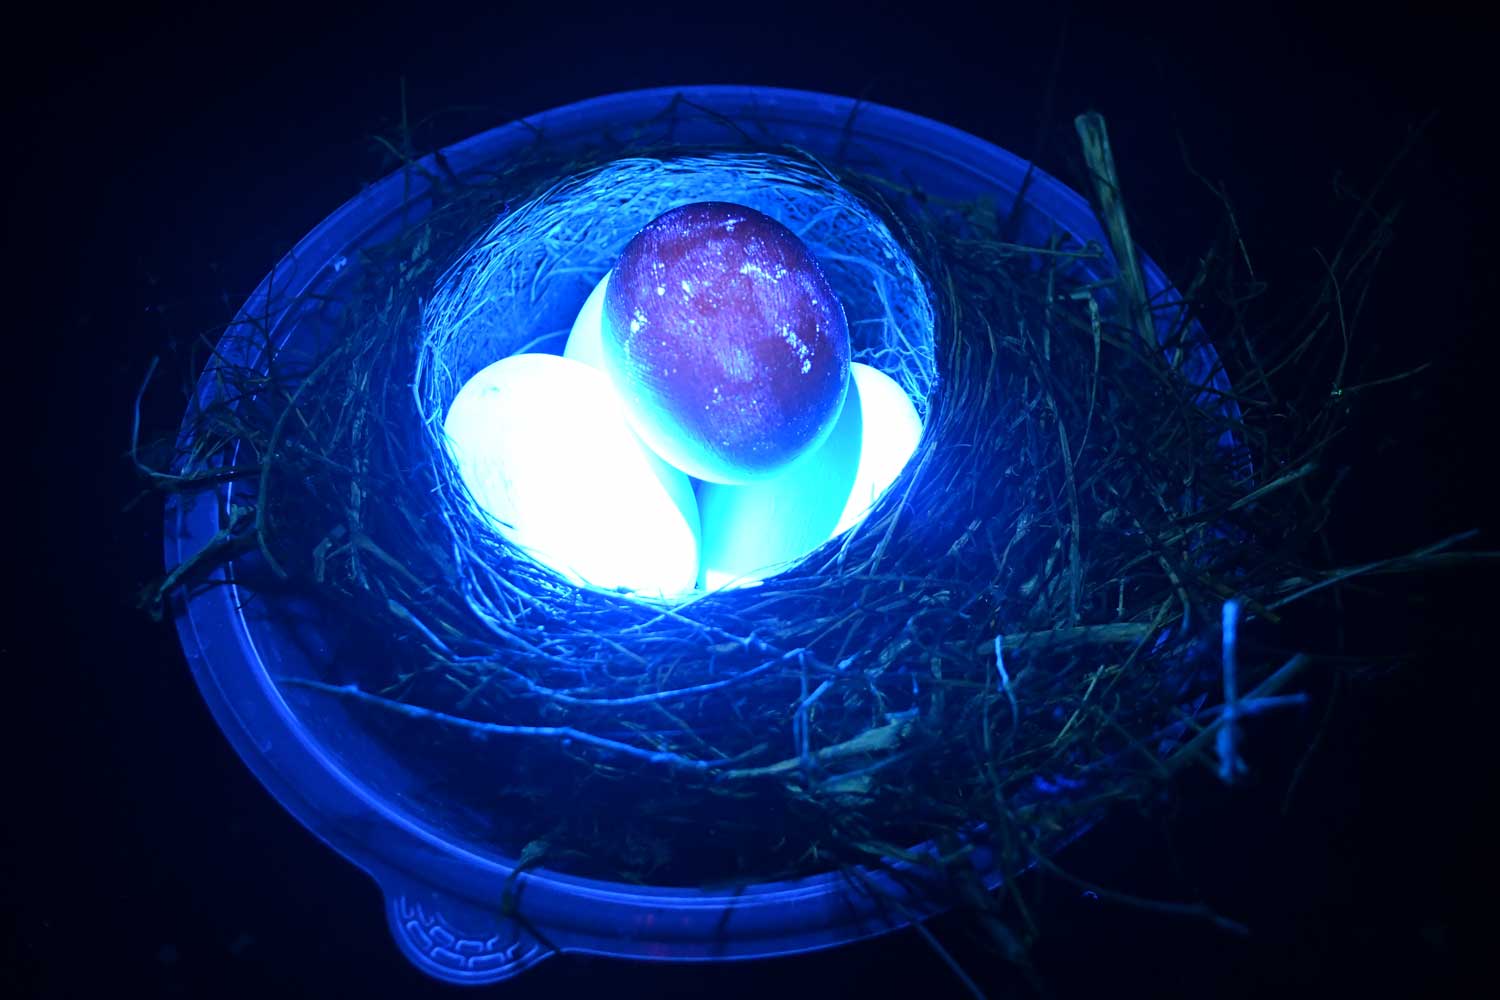 Bird's nest on display with eggs in UV light.